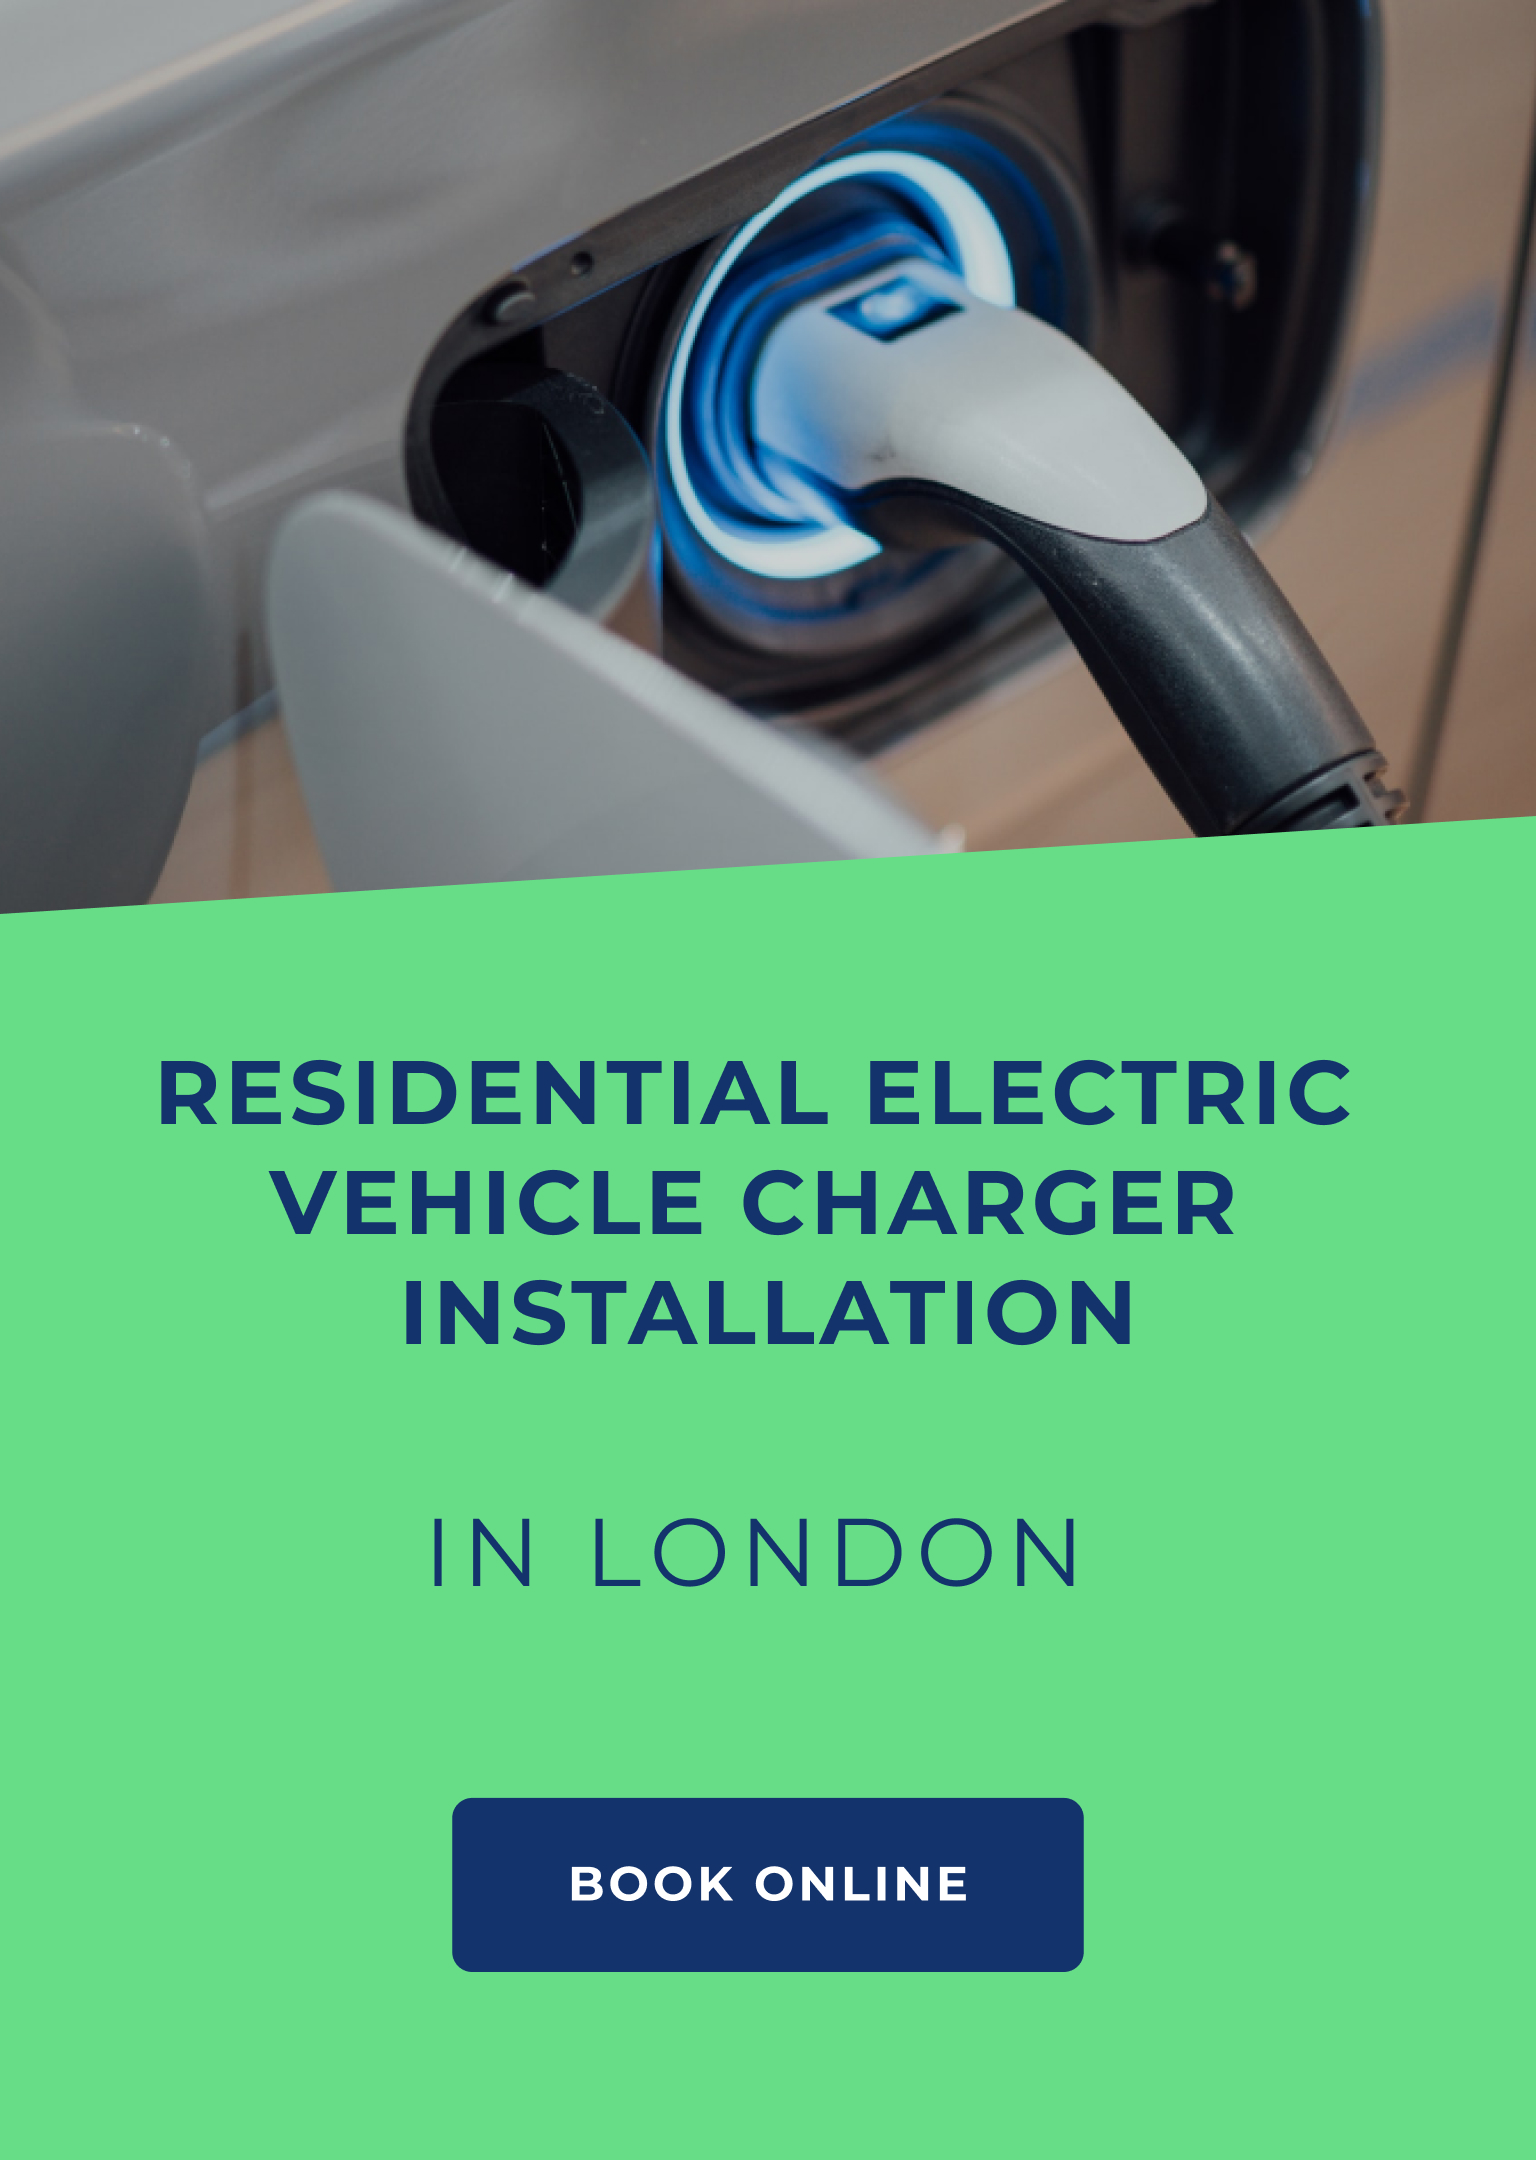 EV charging installation in London